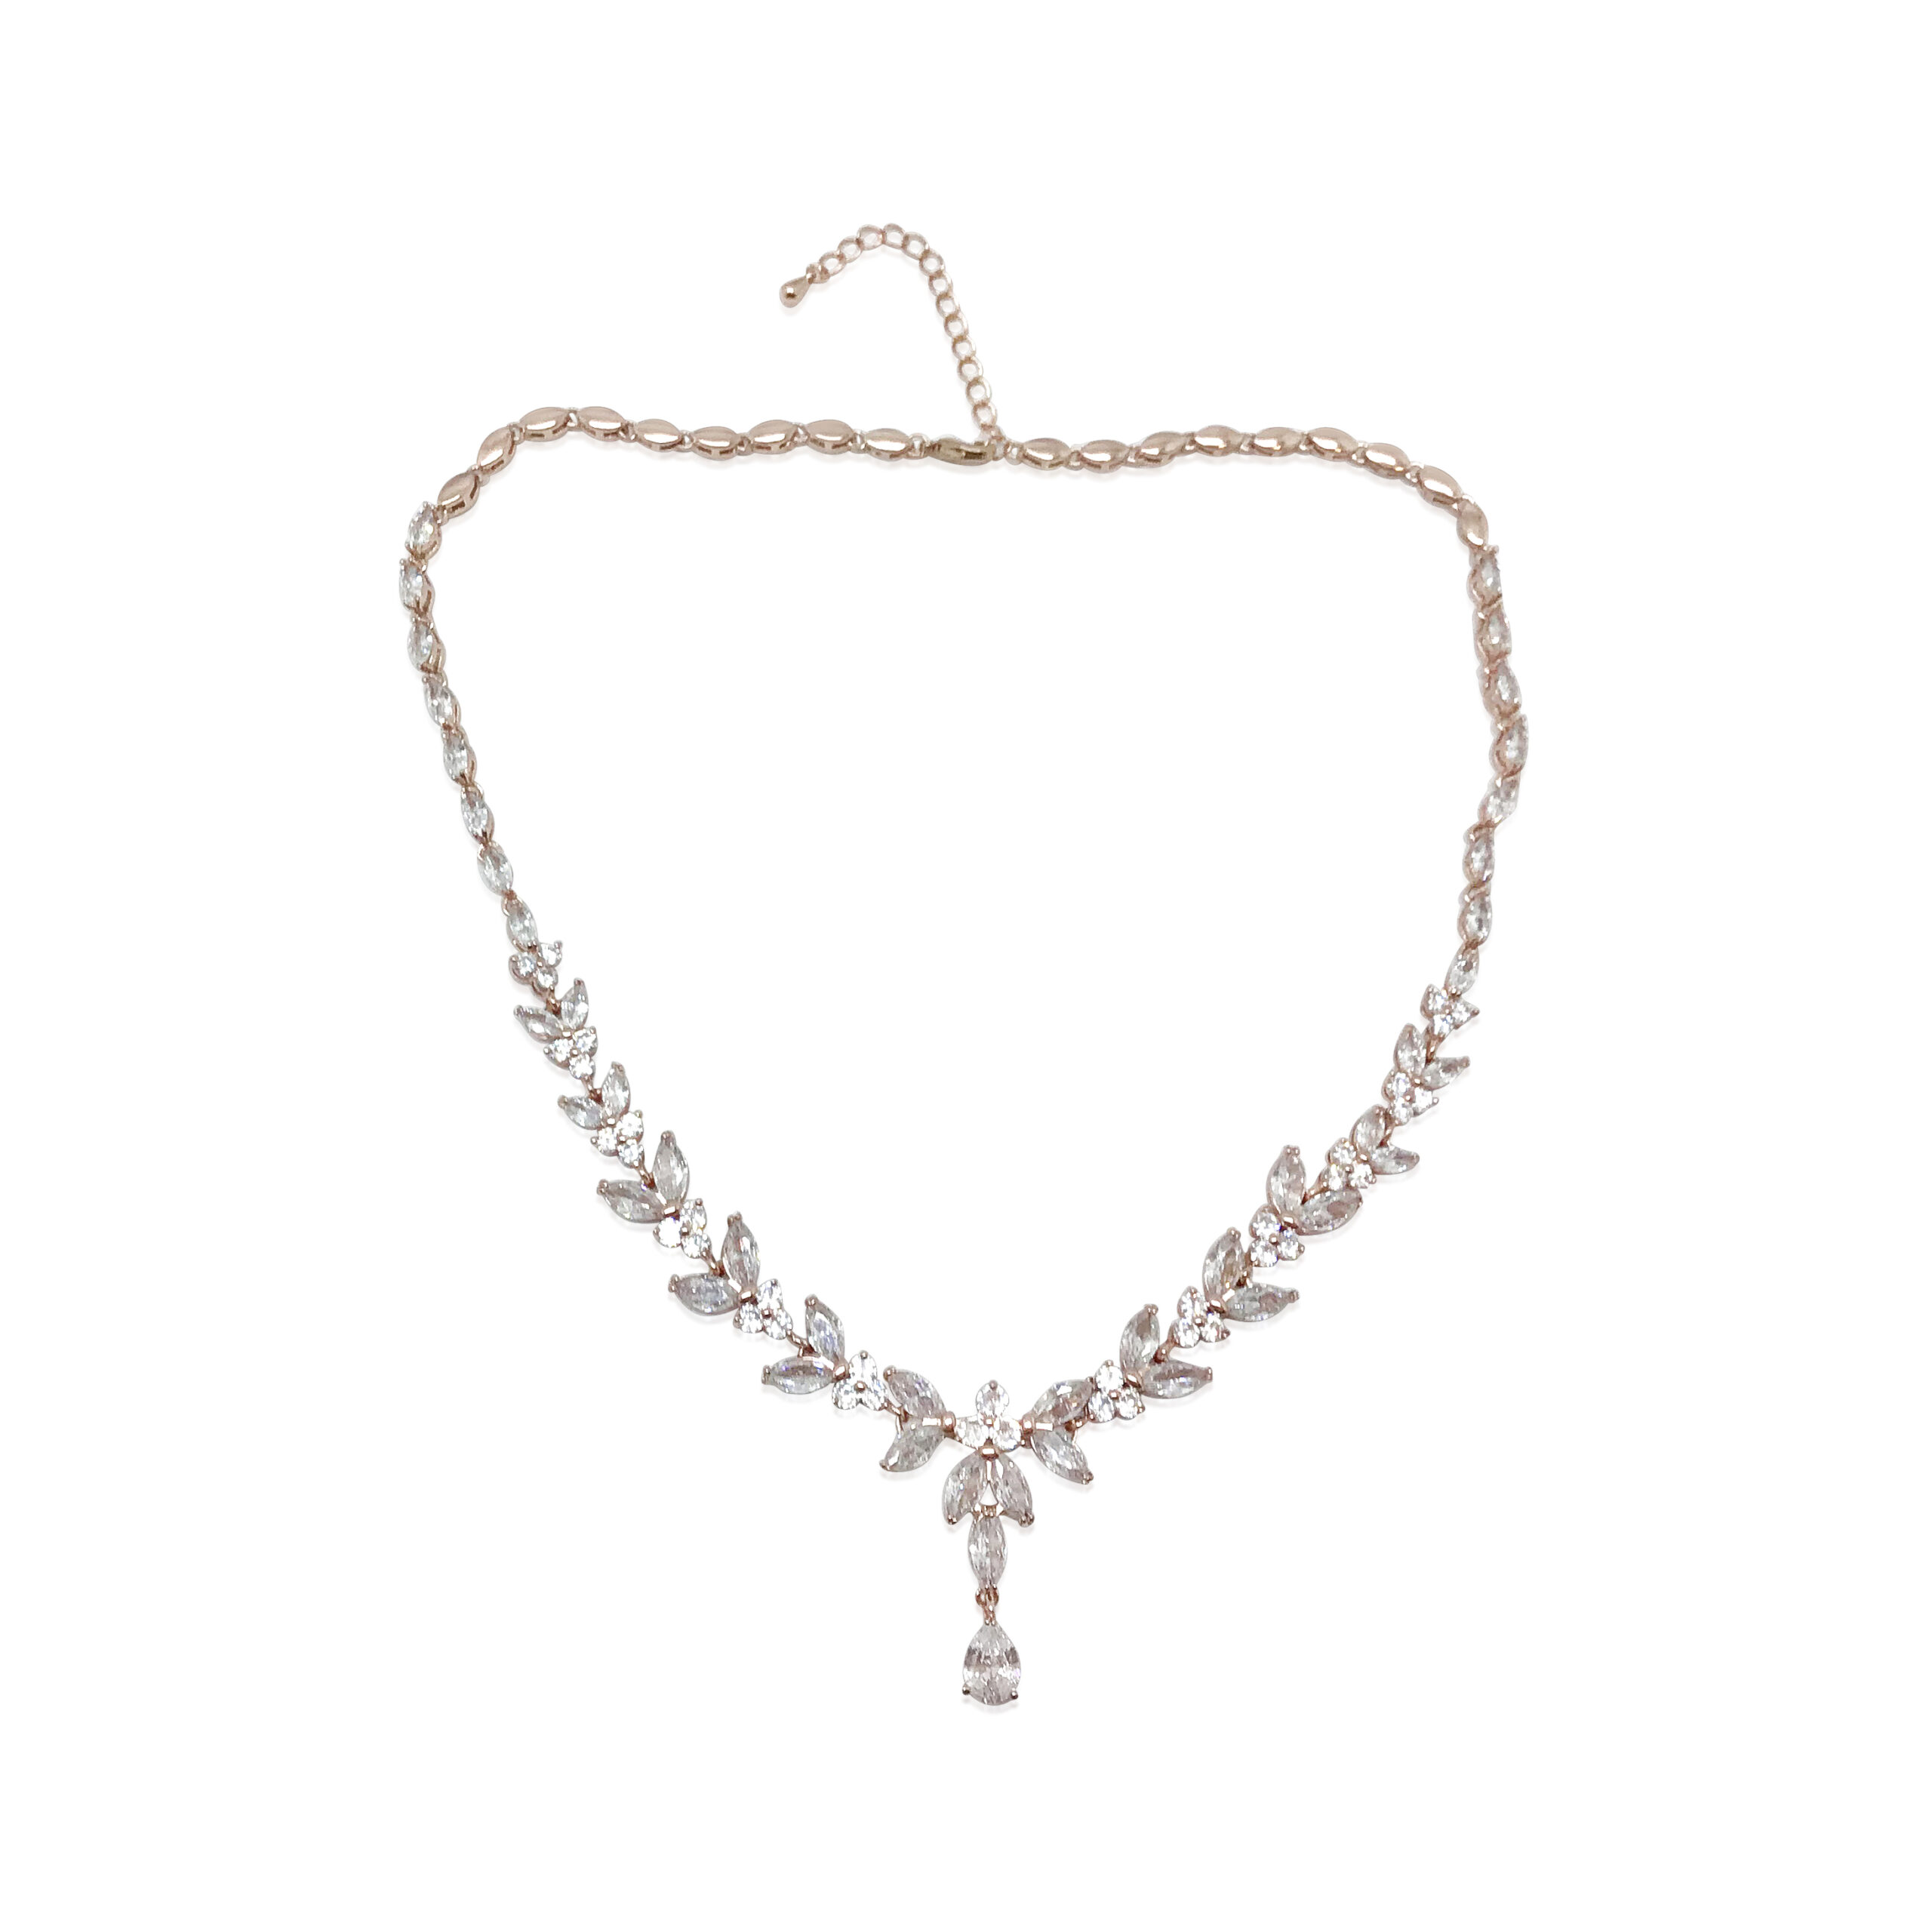 diamond pendant necklace gold| Brenda I Jeanette Maree|Shop online now